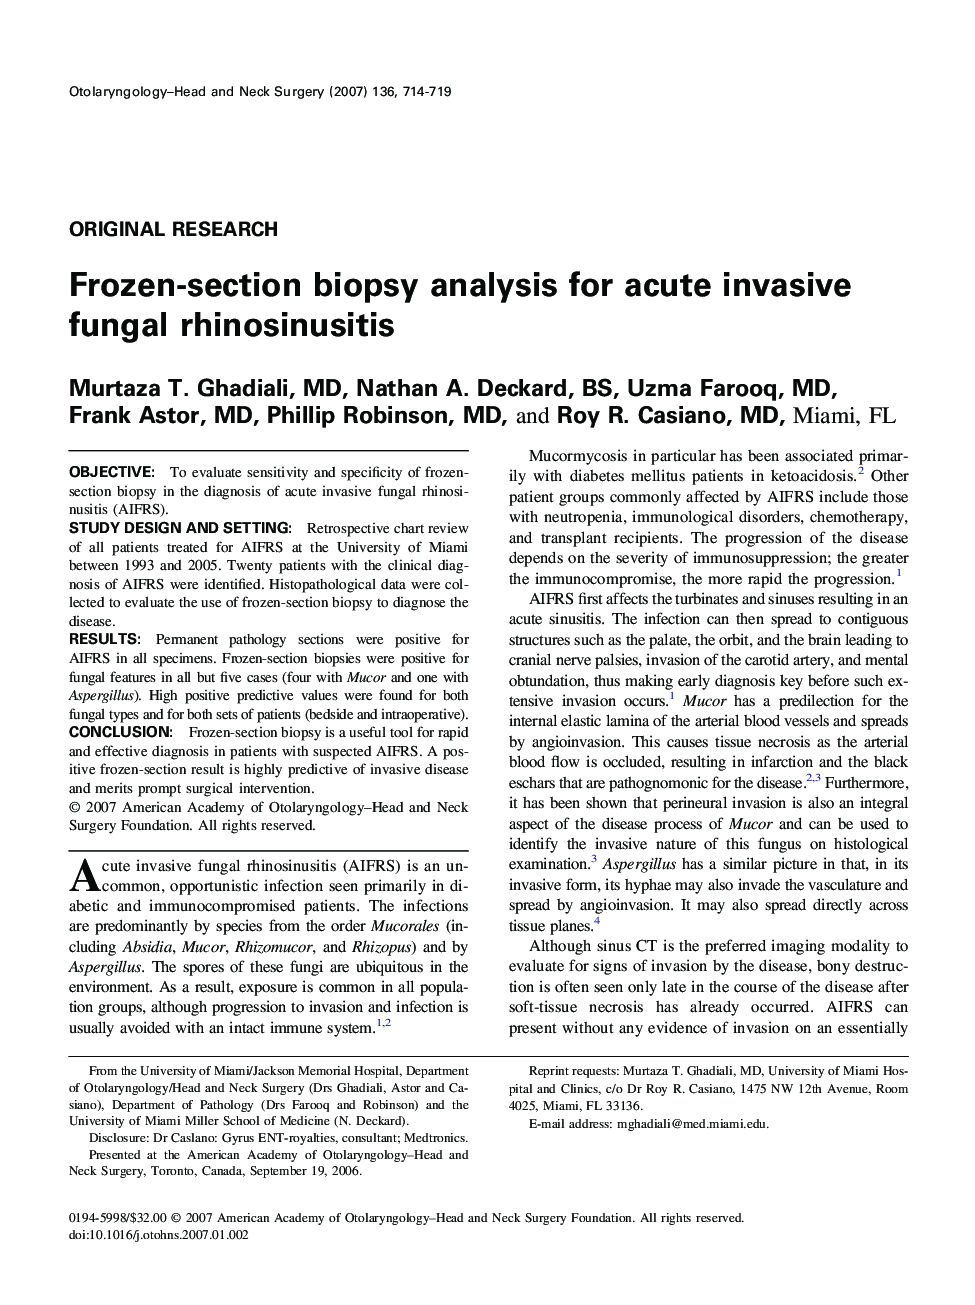 Frozen-section biopsy analysis for acute invasive fungal rhinosinusitis